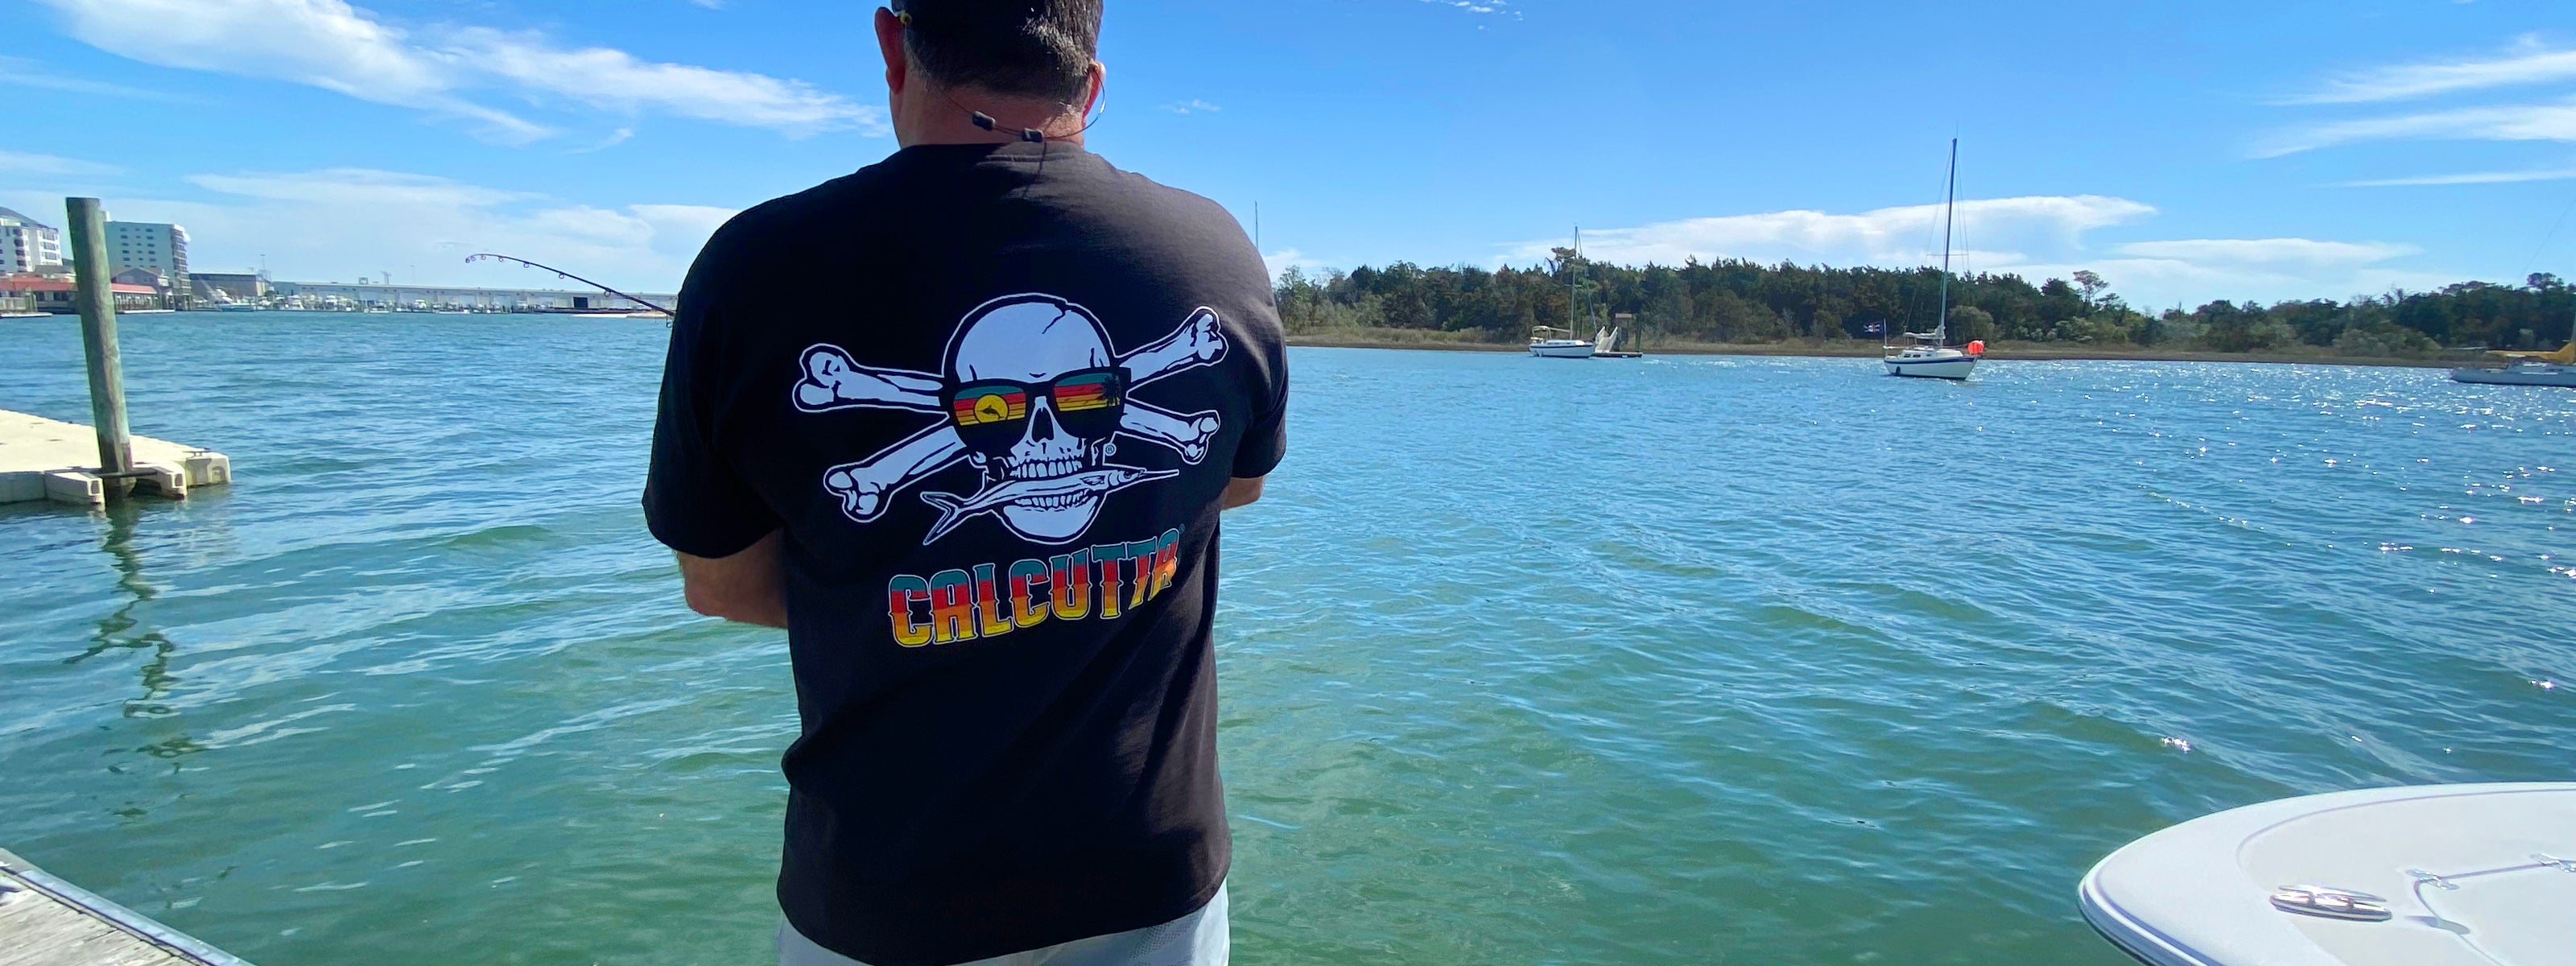  Trendy Ocean & Coast Fishing Patriotic Flag T-Shirt